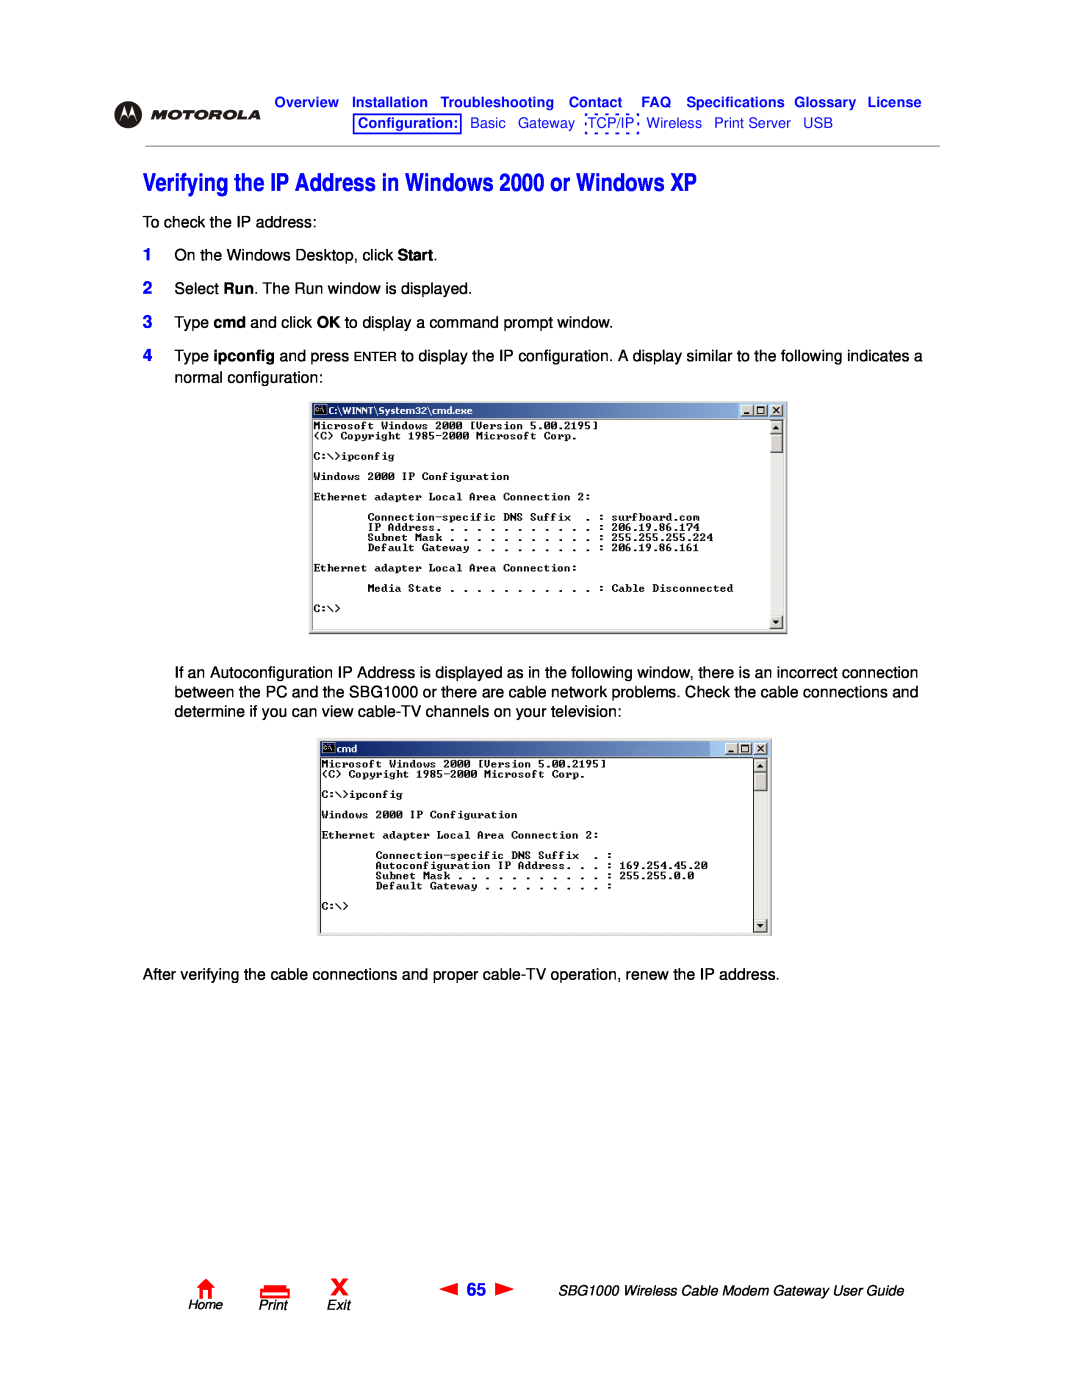 Motorola SBG1000 manual Verifying the IP Address in Windows 2000 or Windows XP 